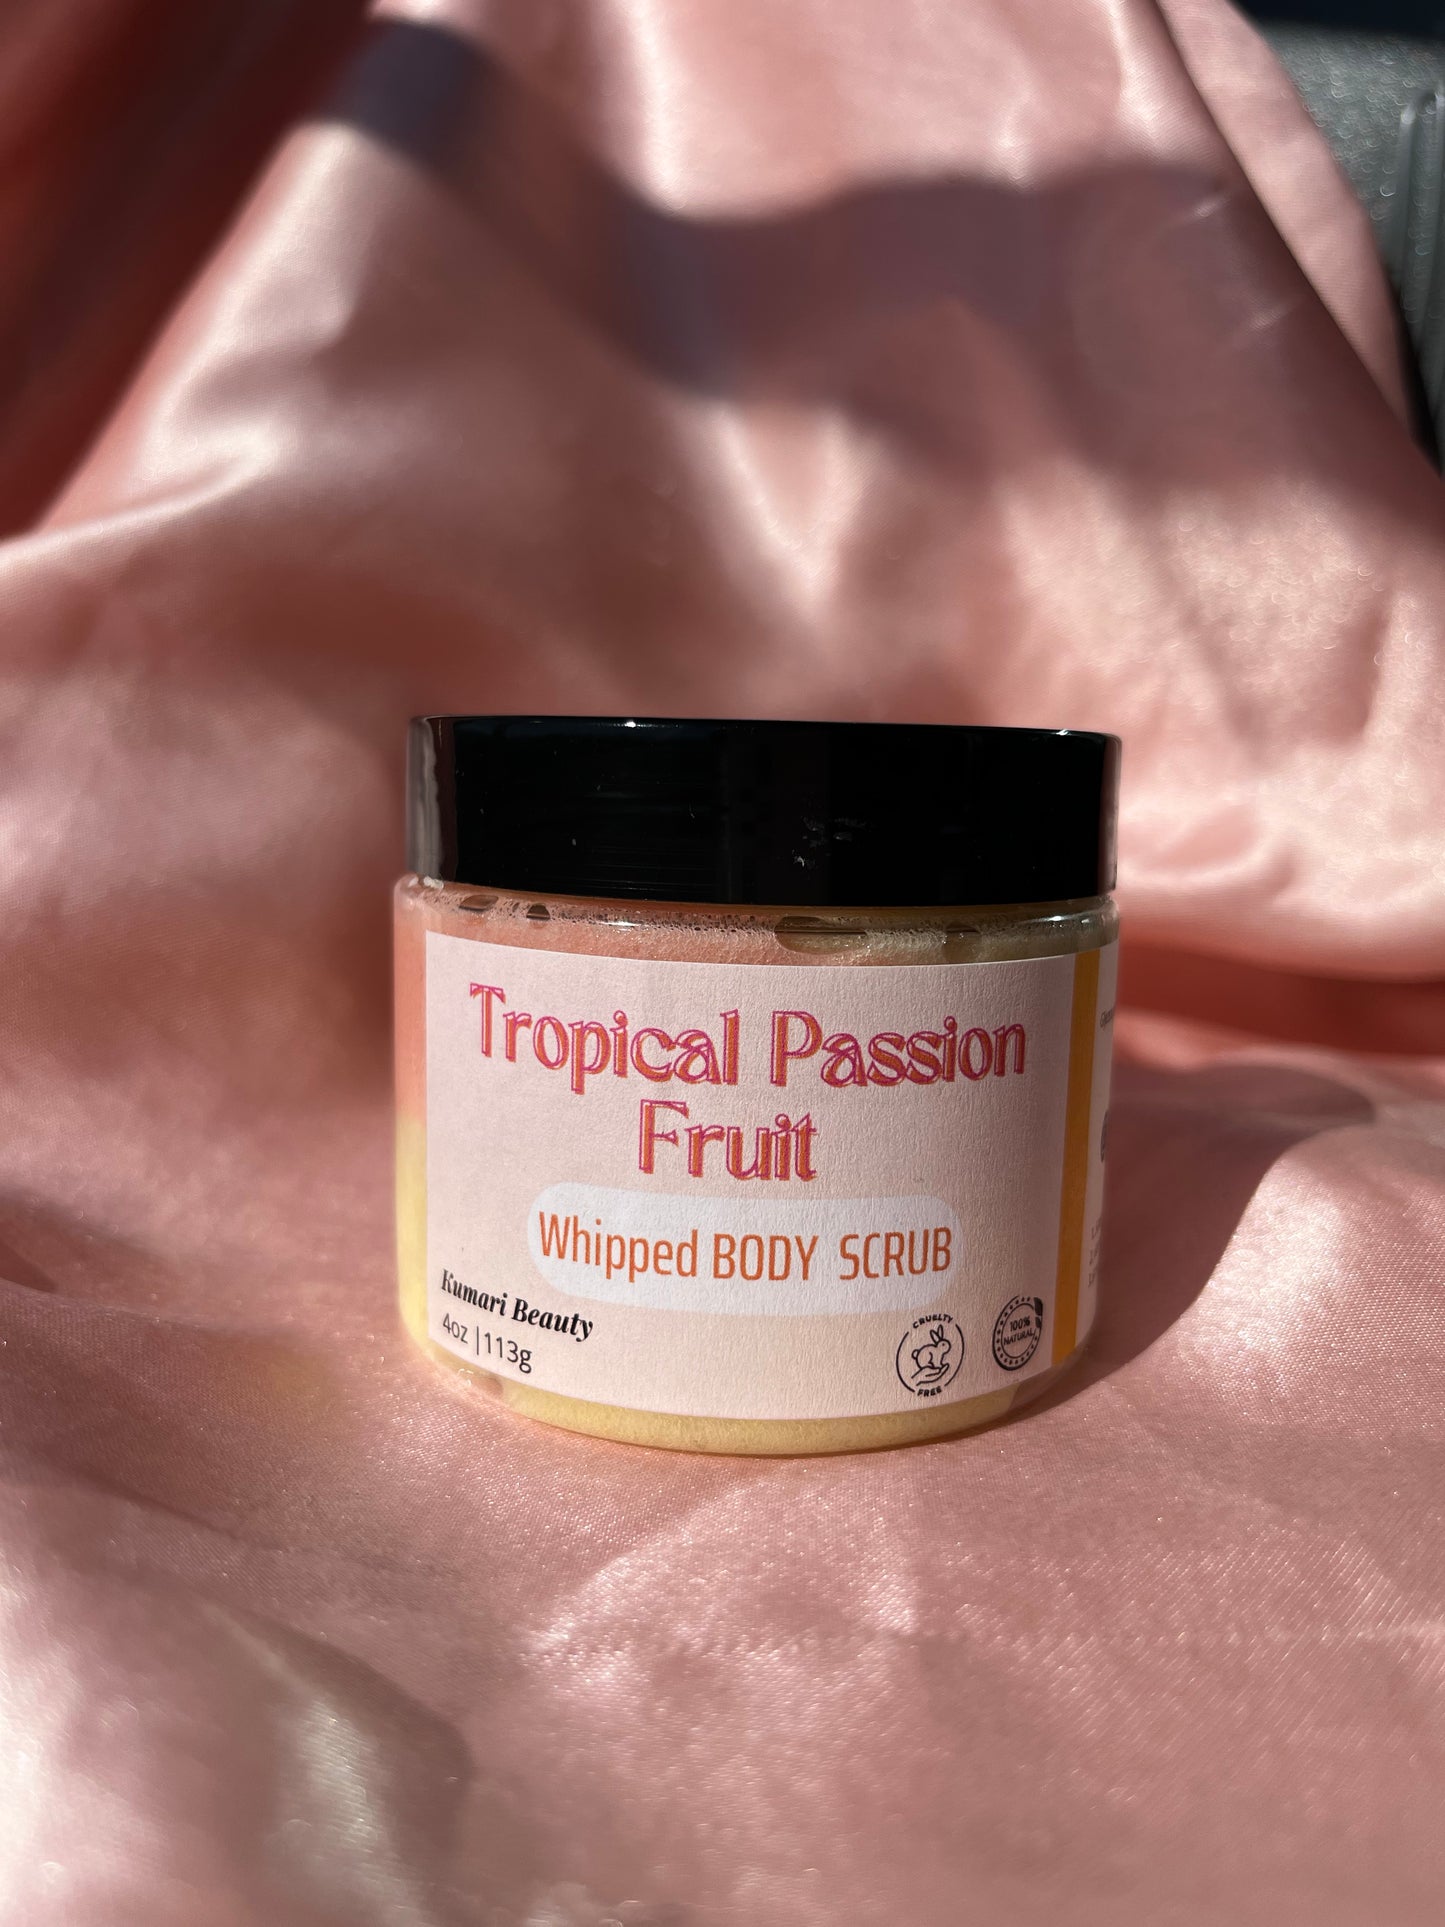 Tropical Passion Fruit BODY SCRUB